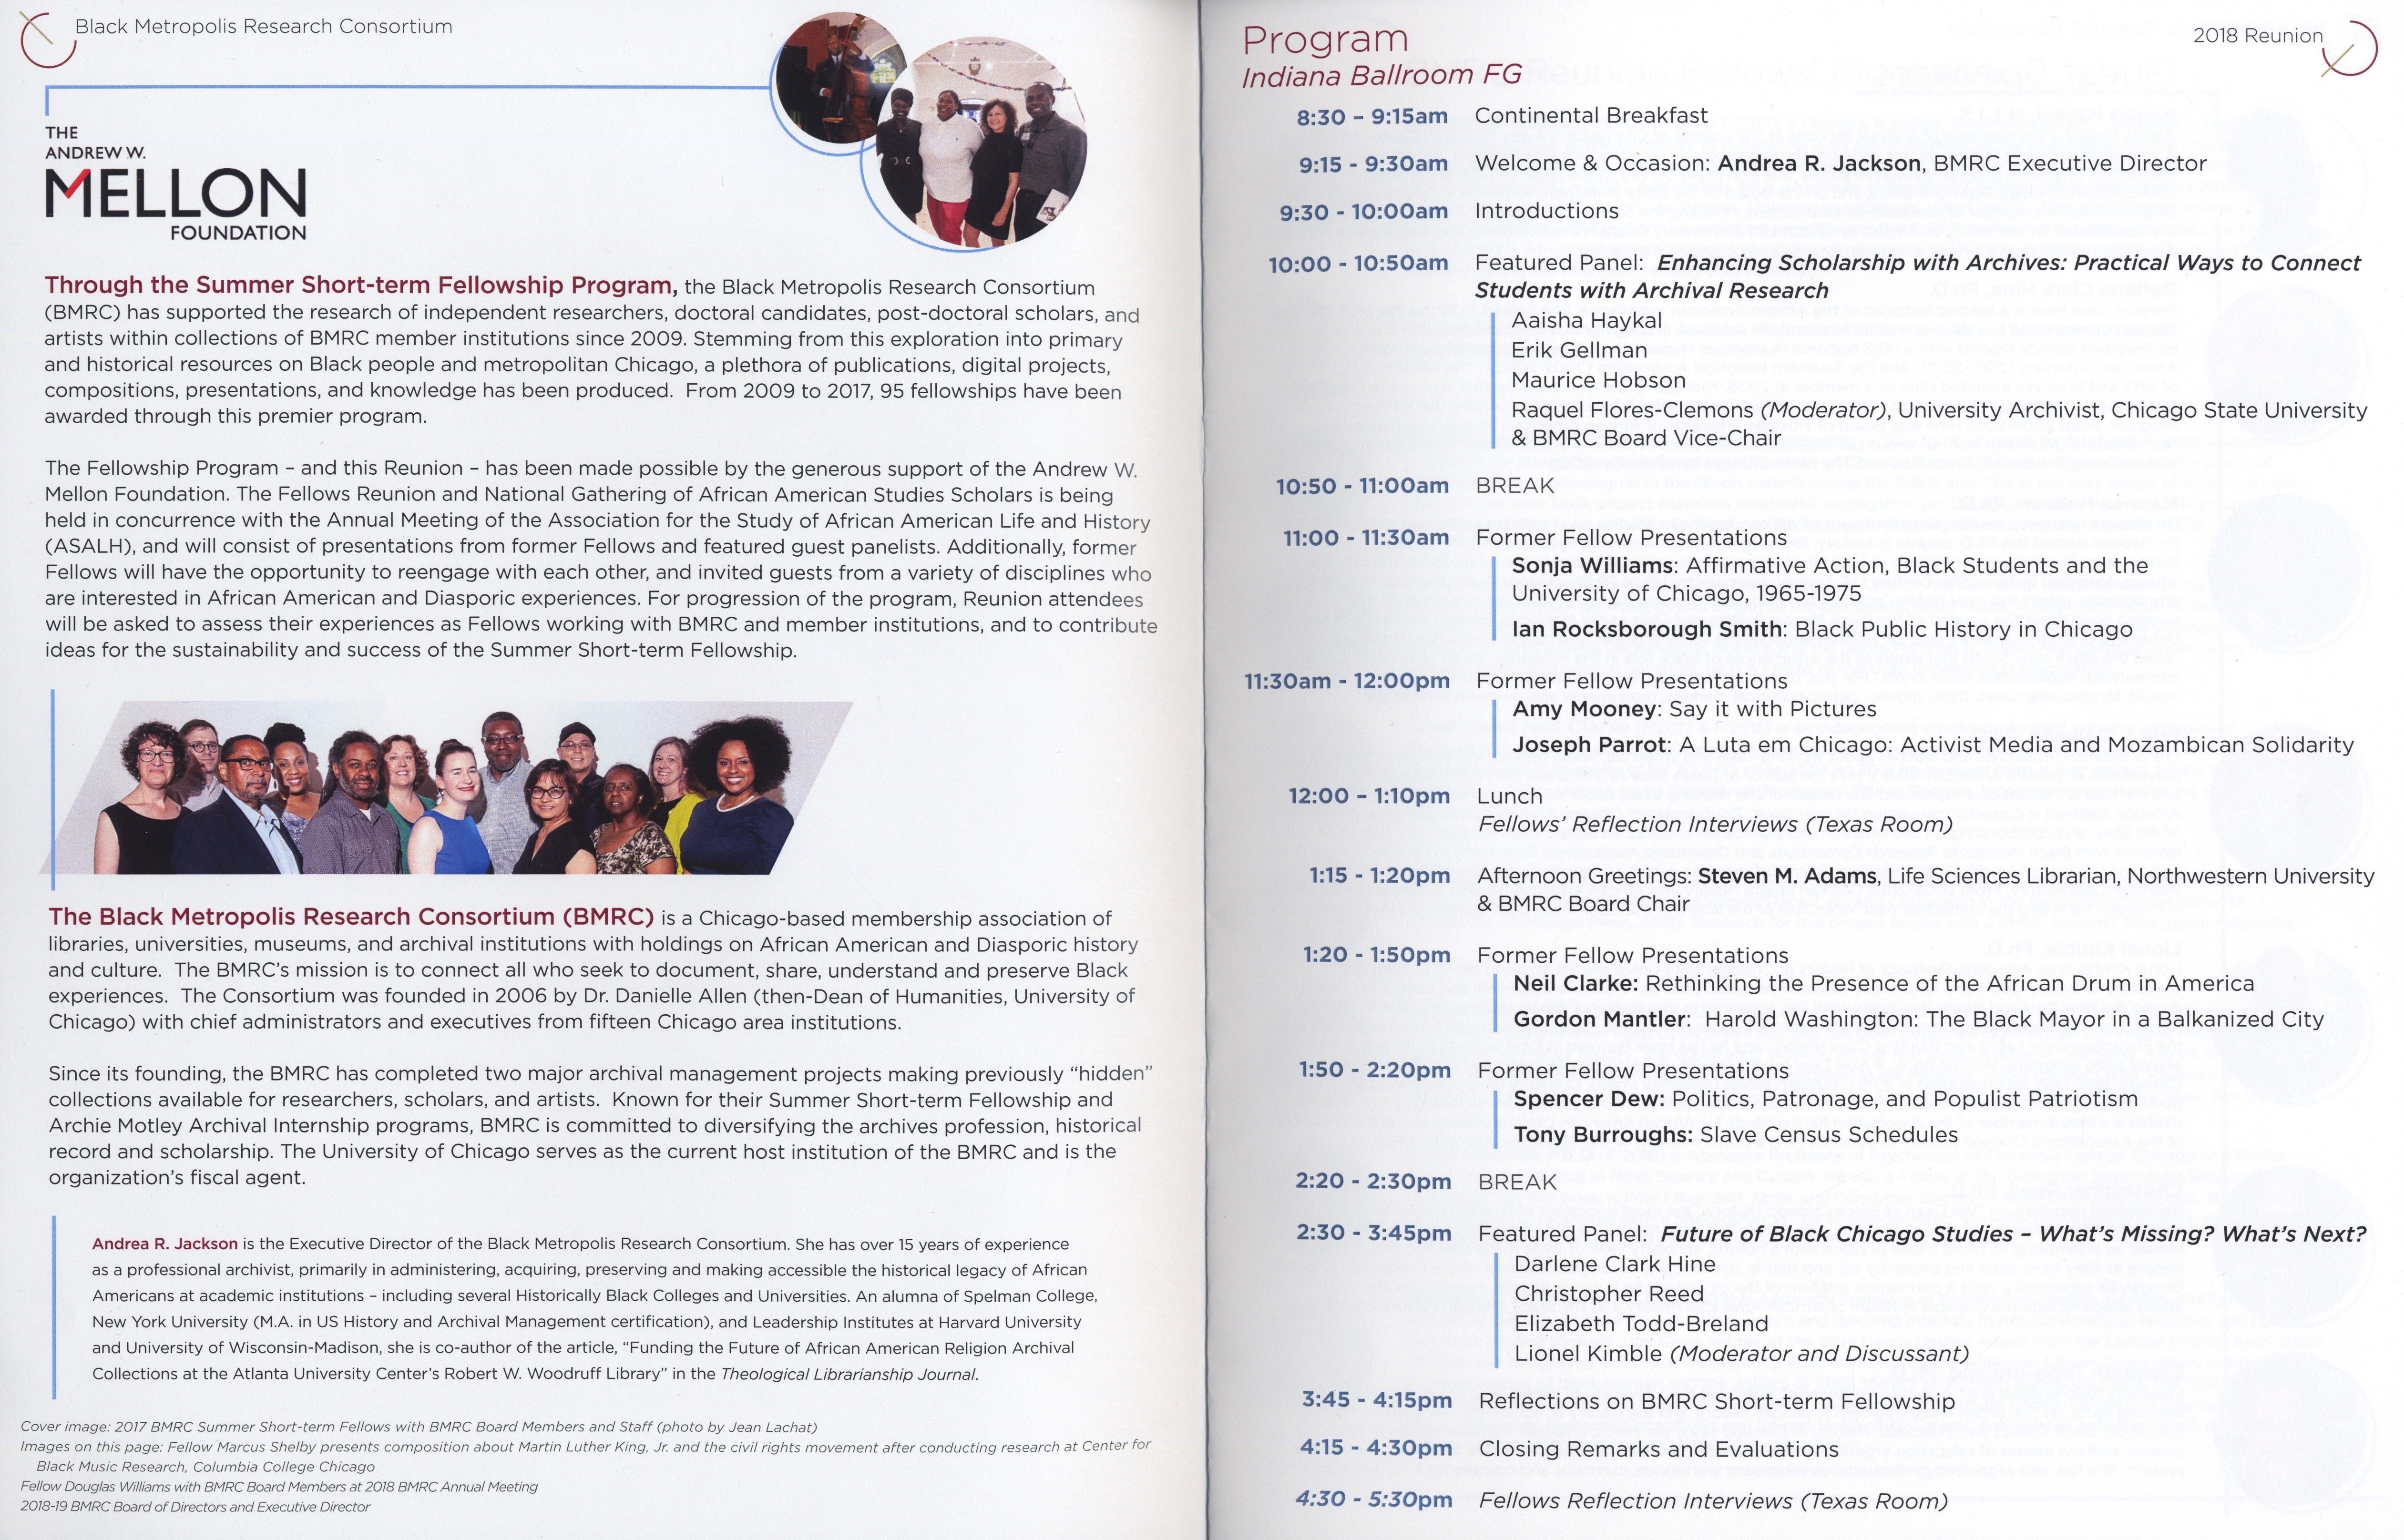 BMRC Summer Short-term Fellows Reunion and National Gathering of African American Studies Program Schedule, 2018